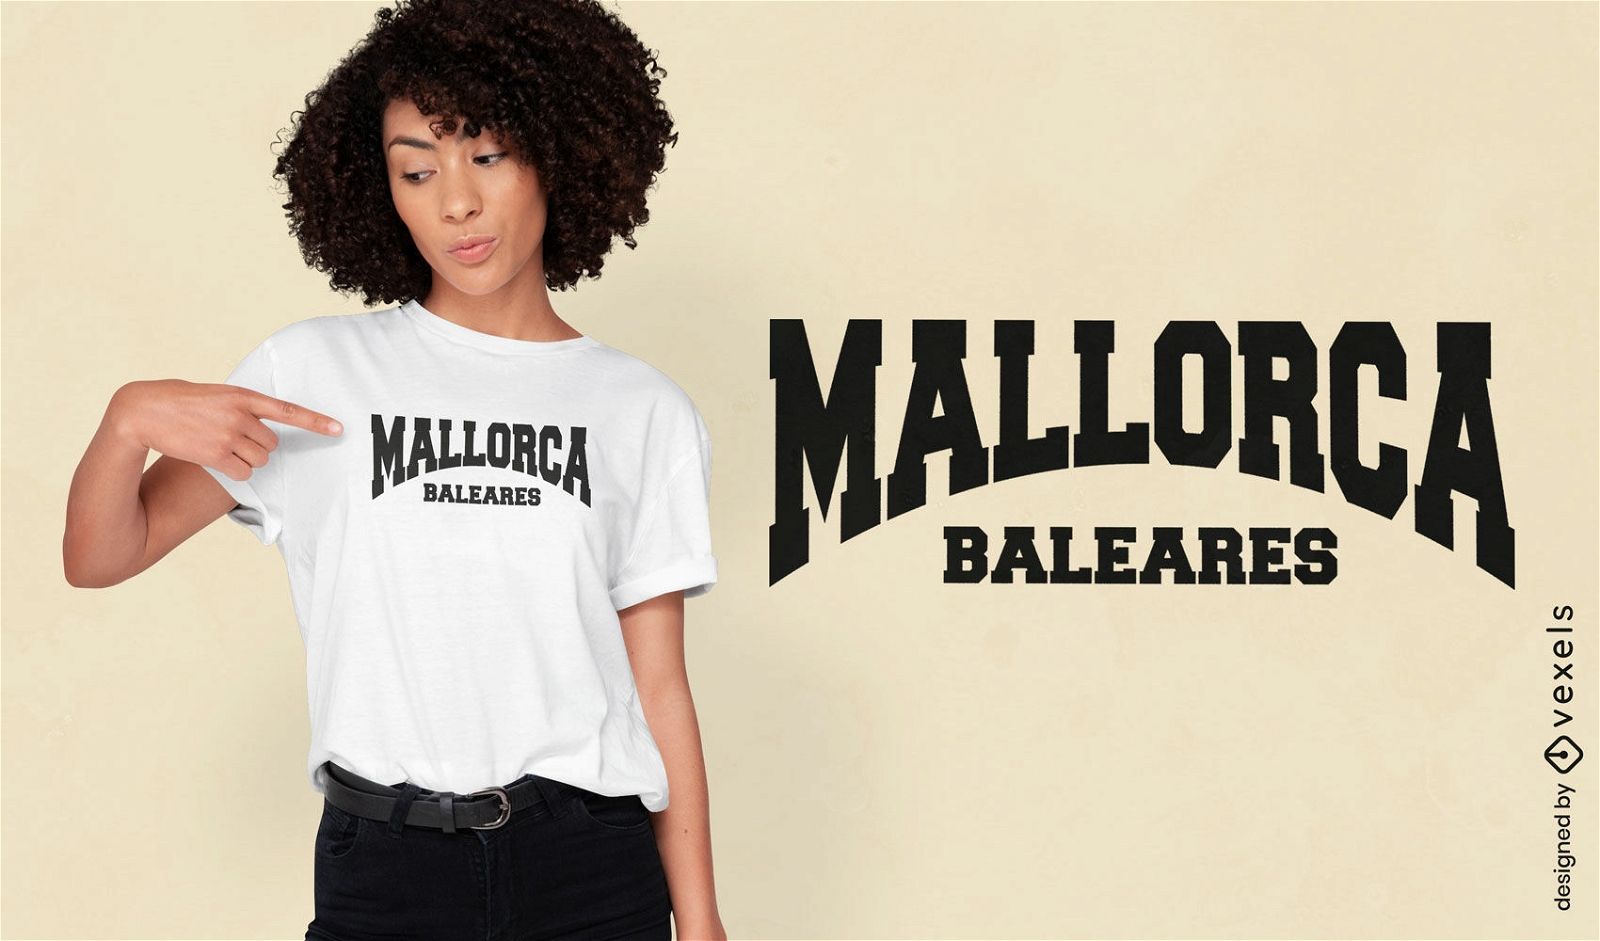 Mallorca Baleares t-shirt design